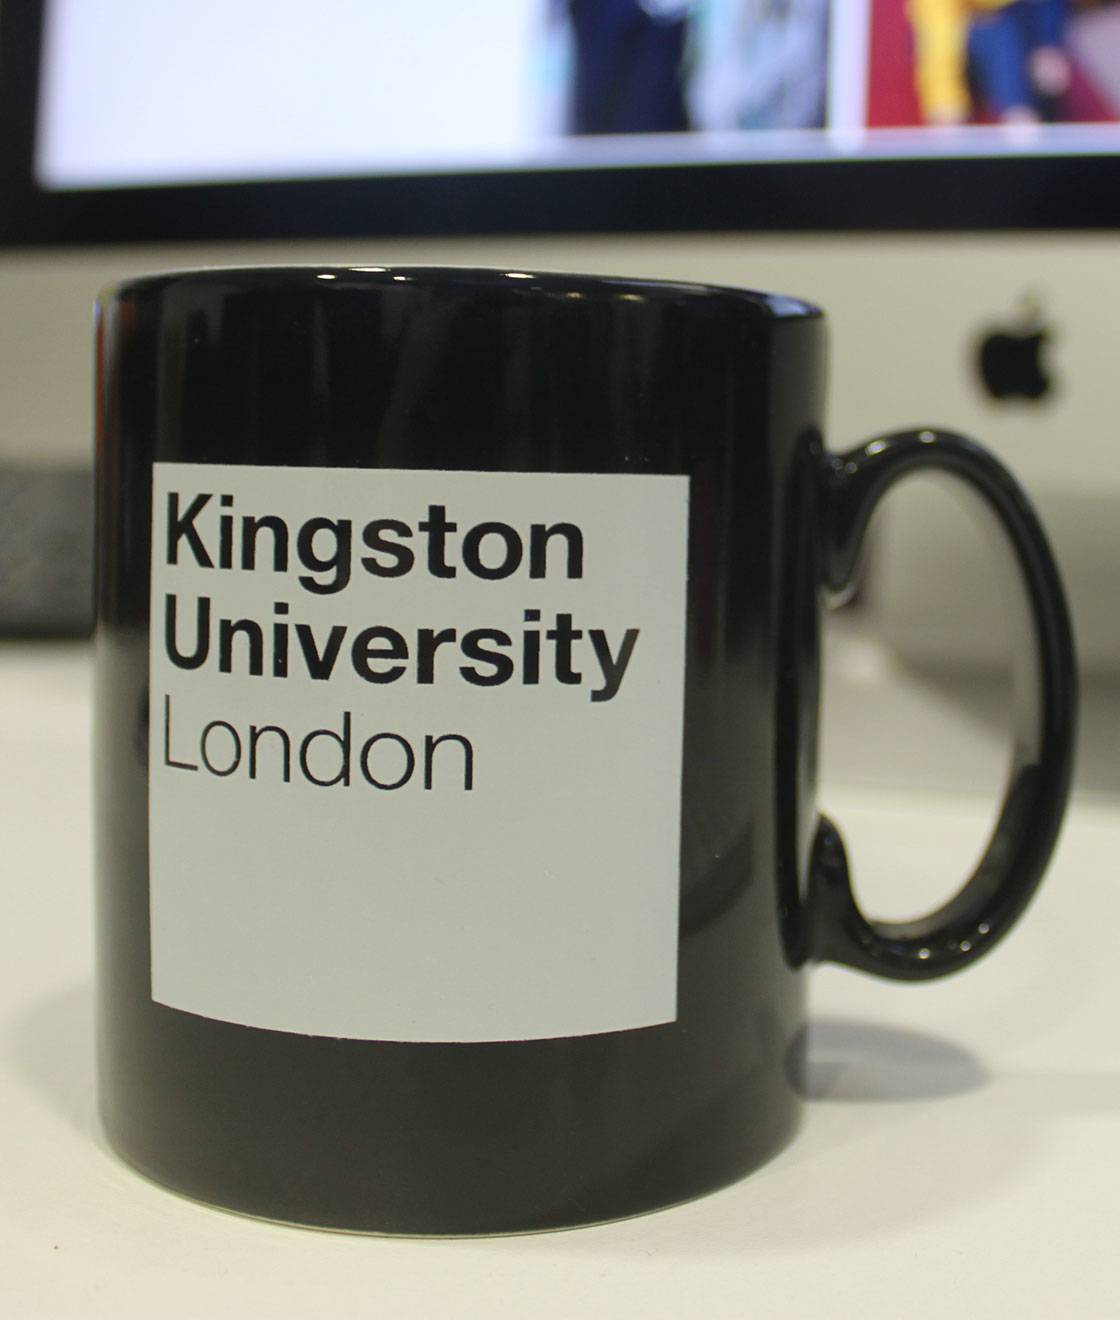 A black mug with a white Kingston UniversityLondon logo